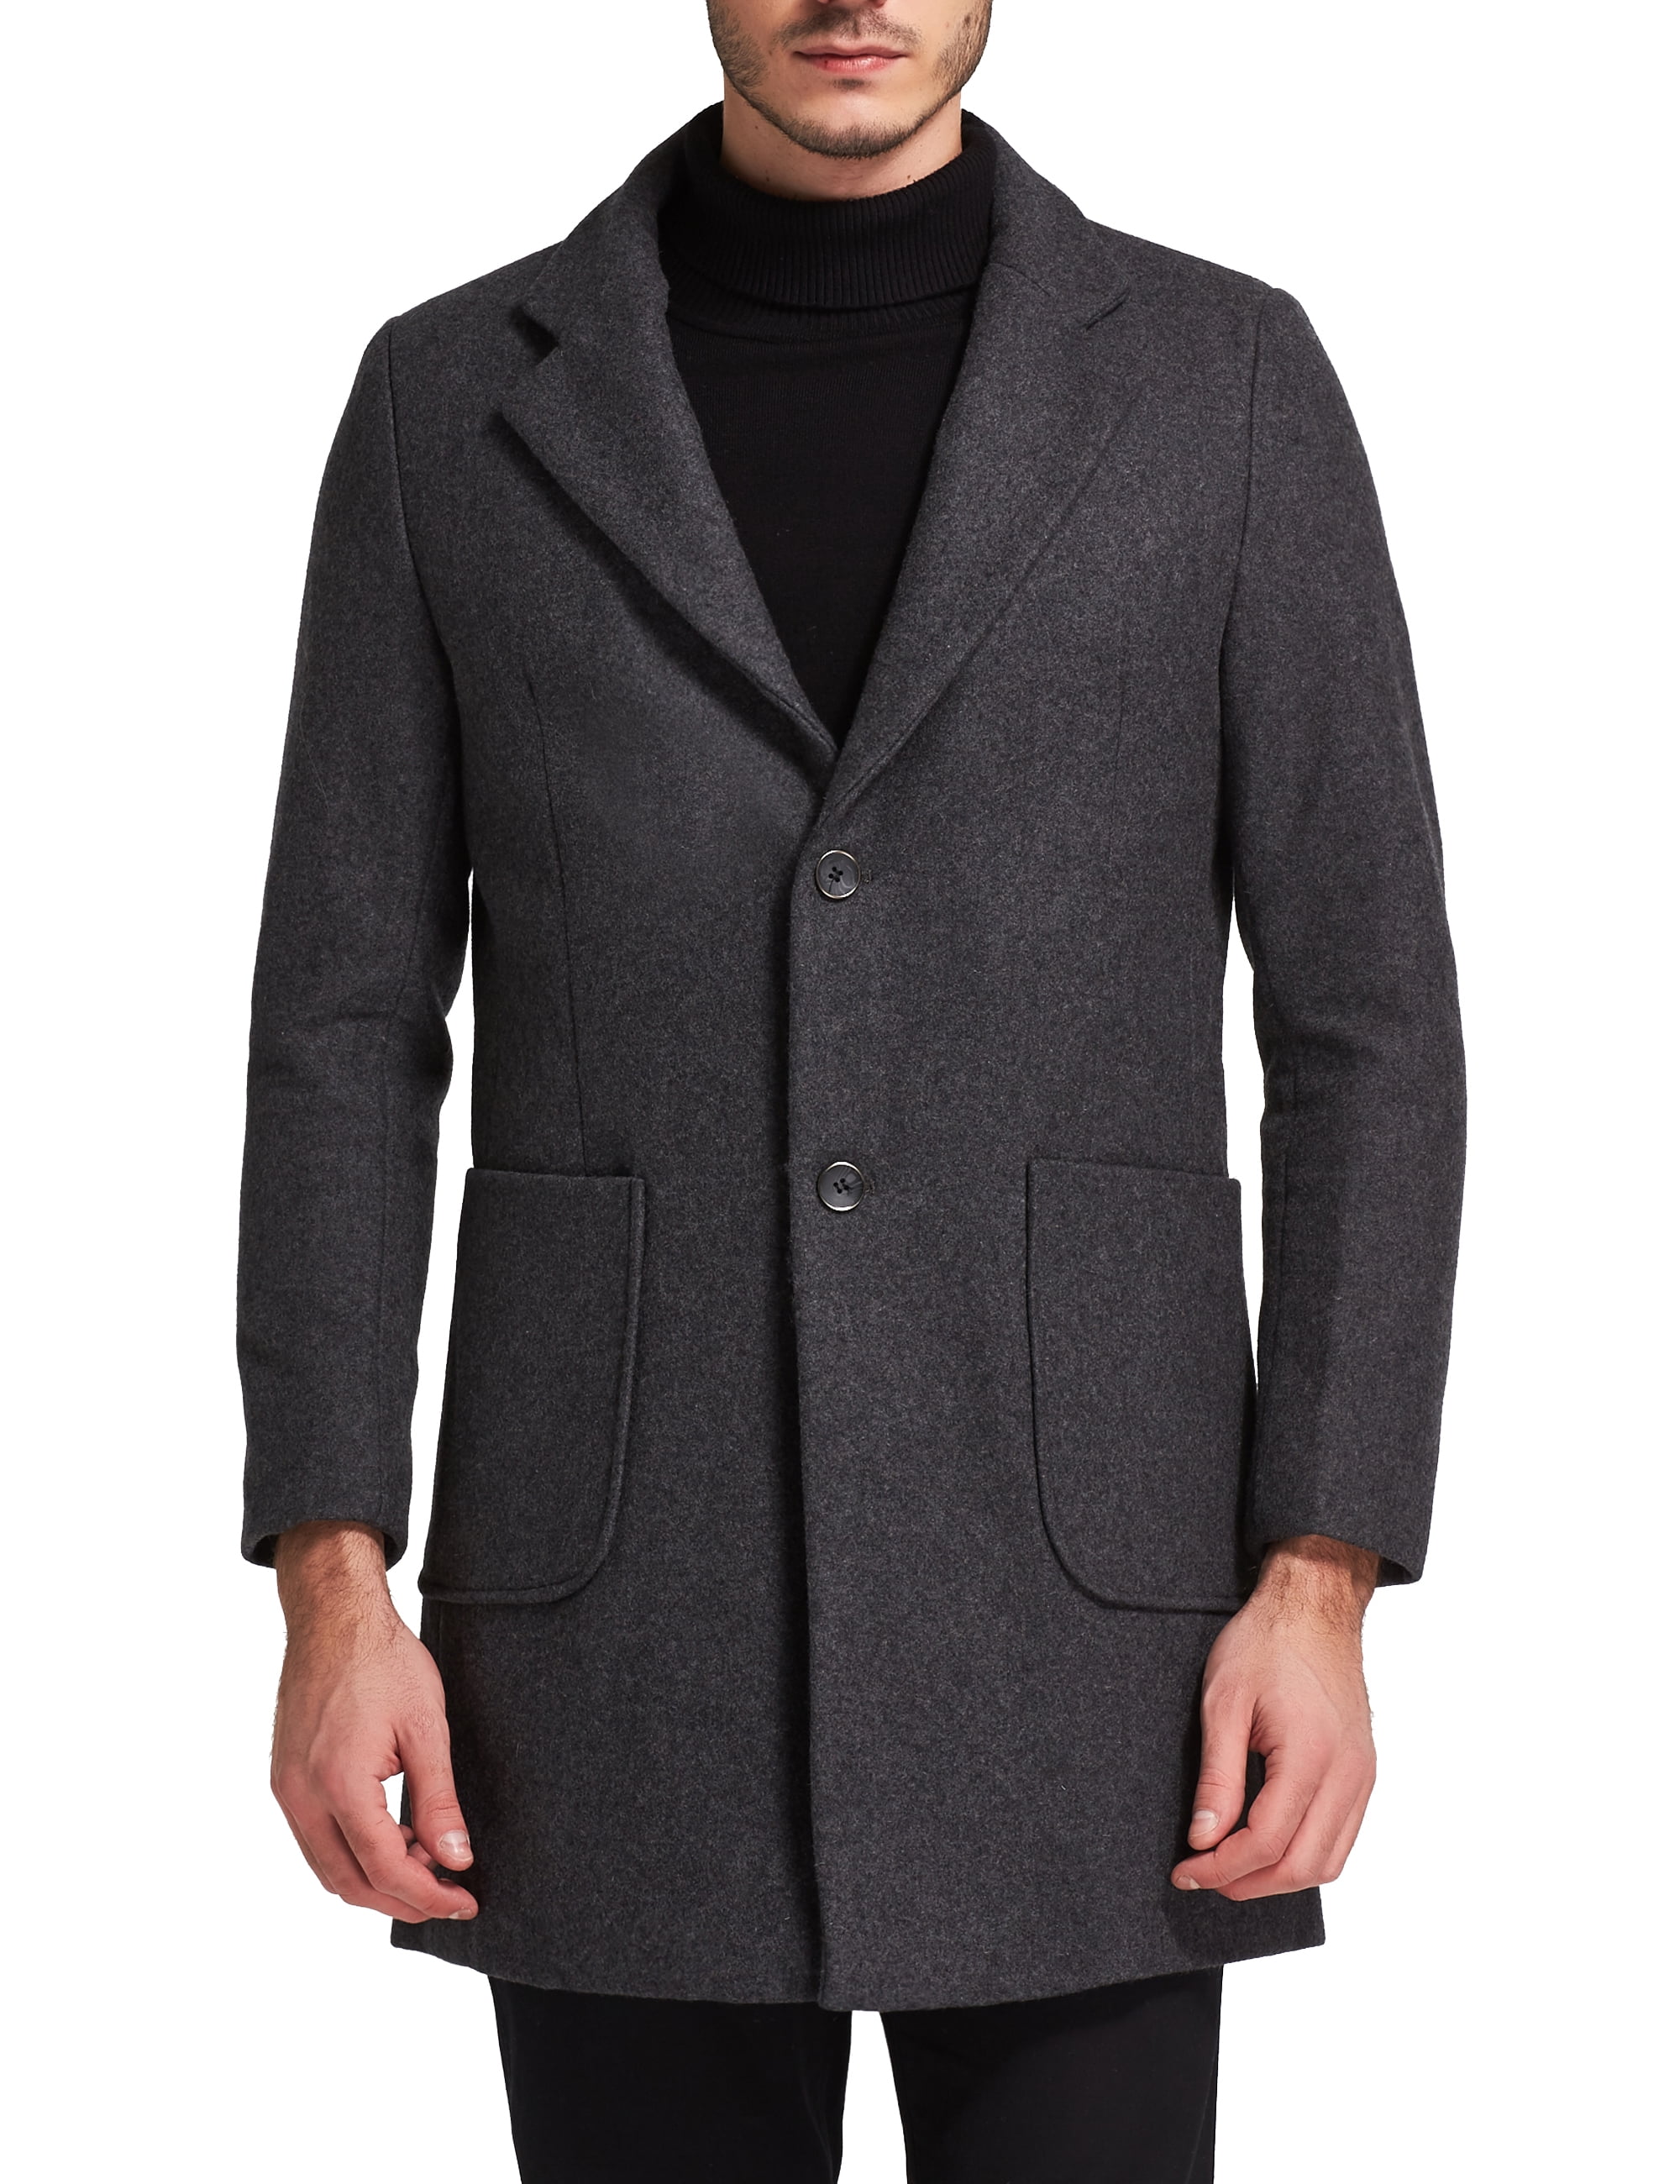 Men's Classic Wool Blend Pea Coat Outwear Blazer Suit - Walmart.com